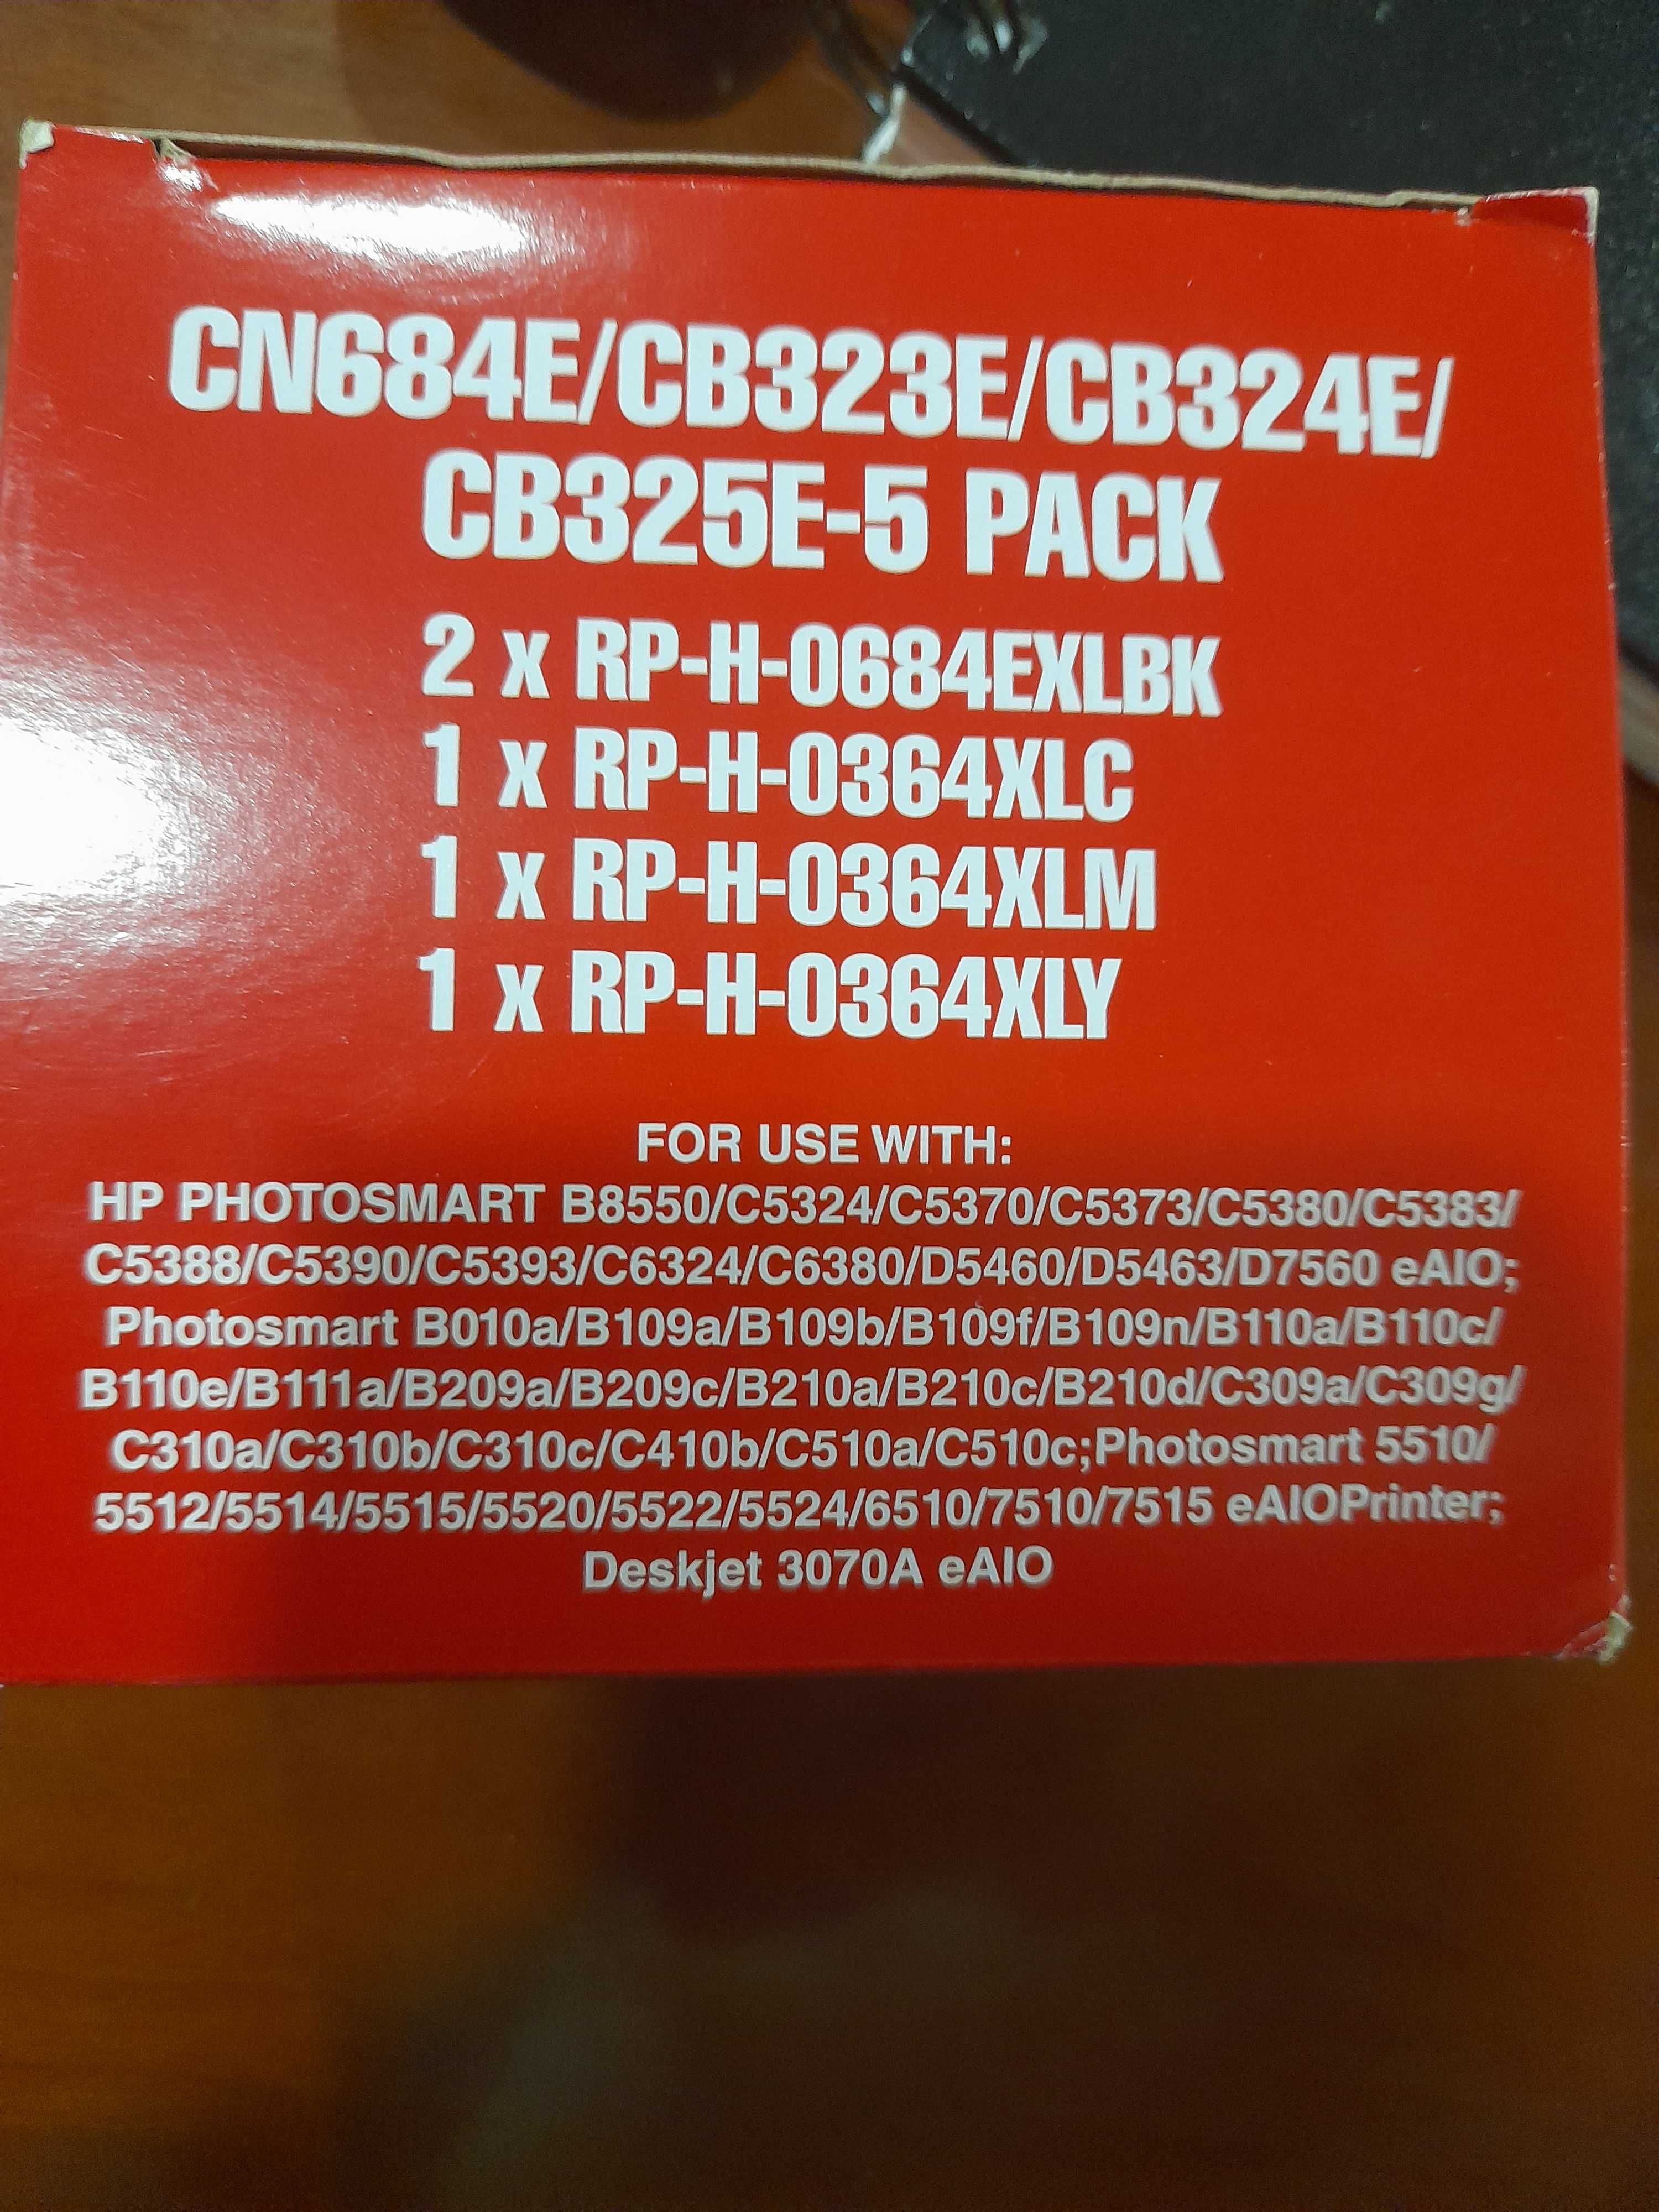 HP Photosmart C5830 All-in-One - Como nova